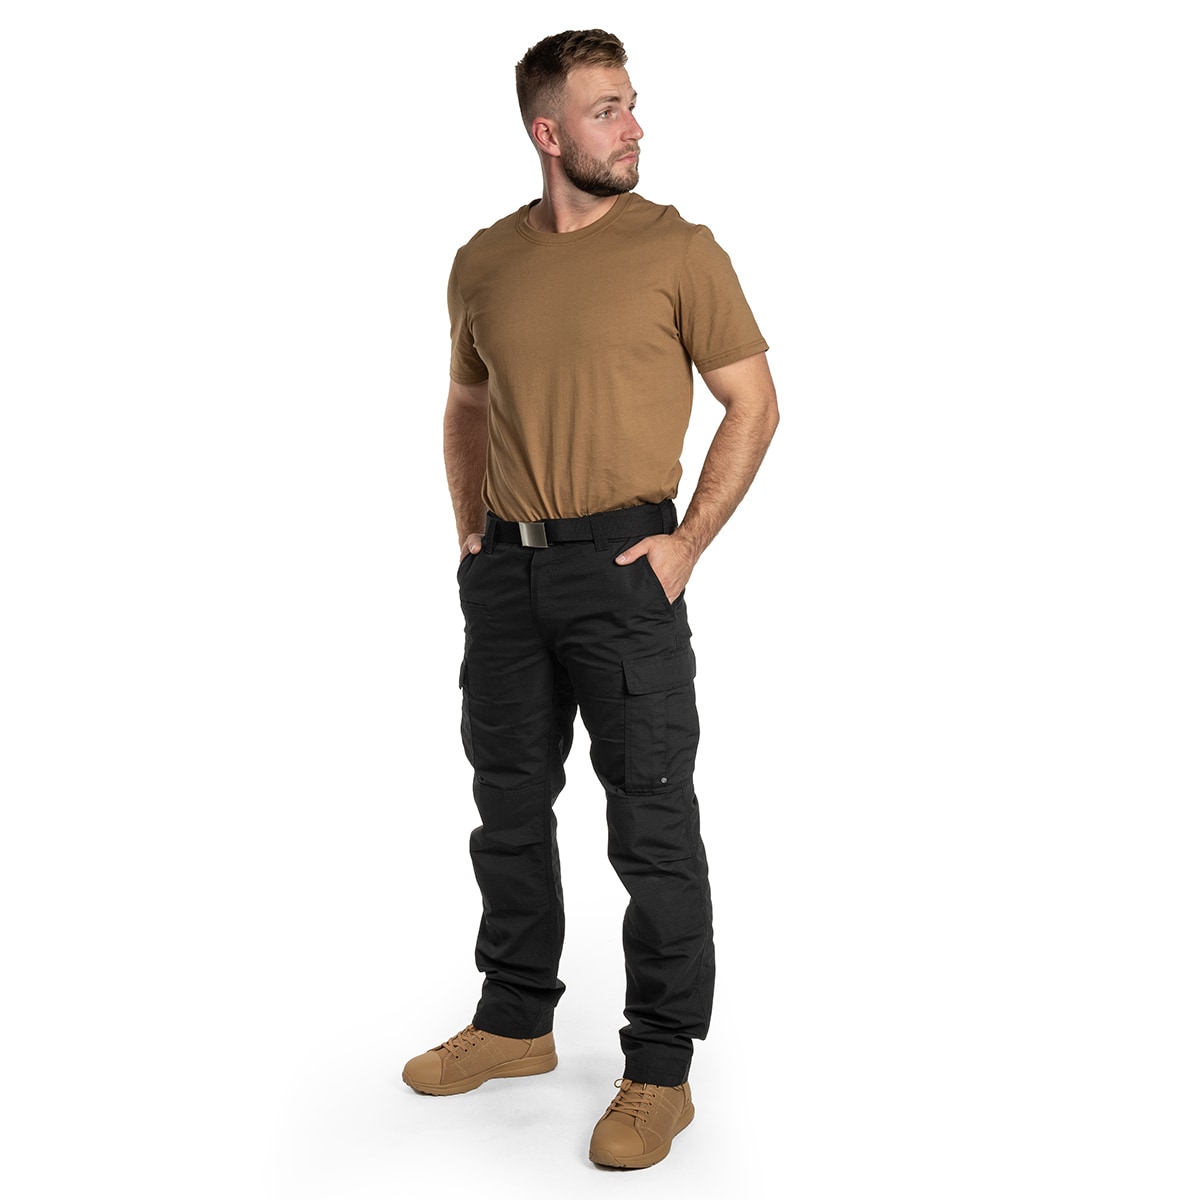 Spodnie wojskowe Pentagon BDU 2.0 Black (K05001-01)